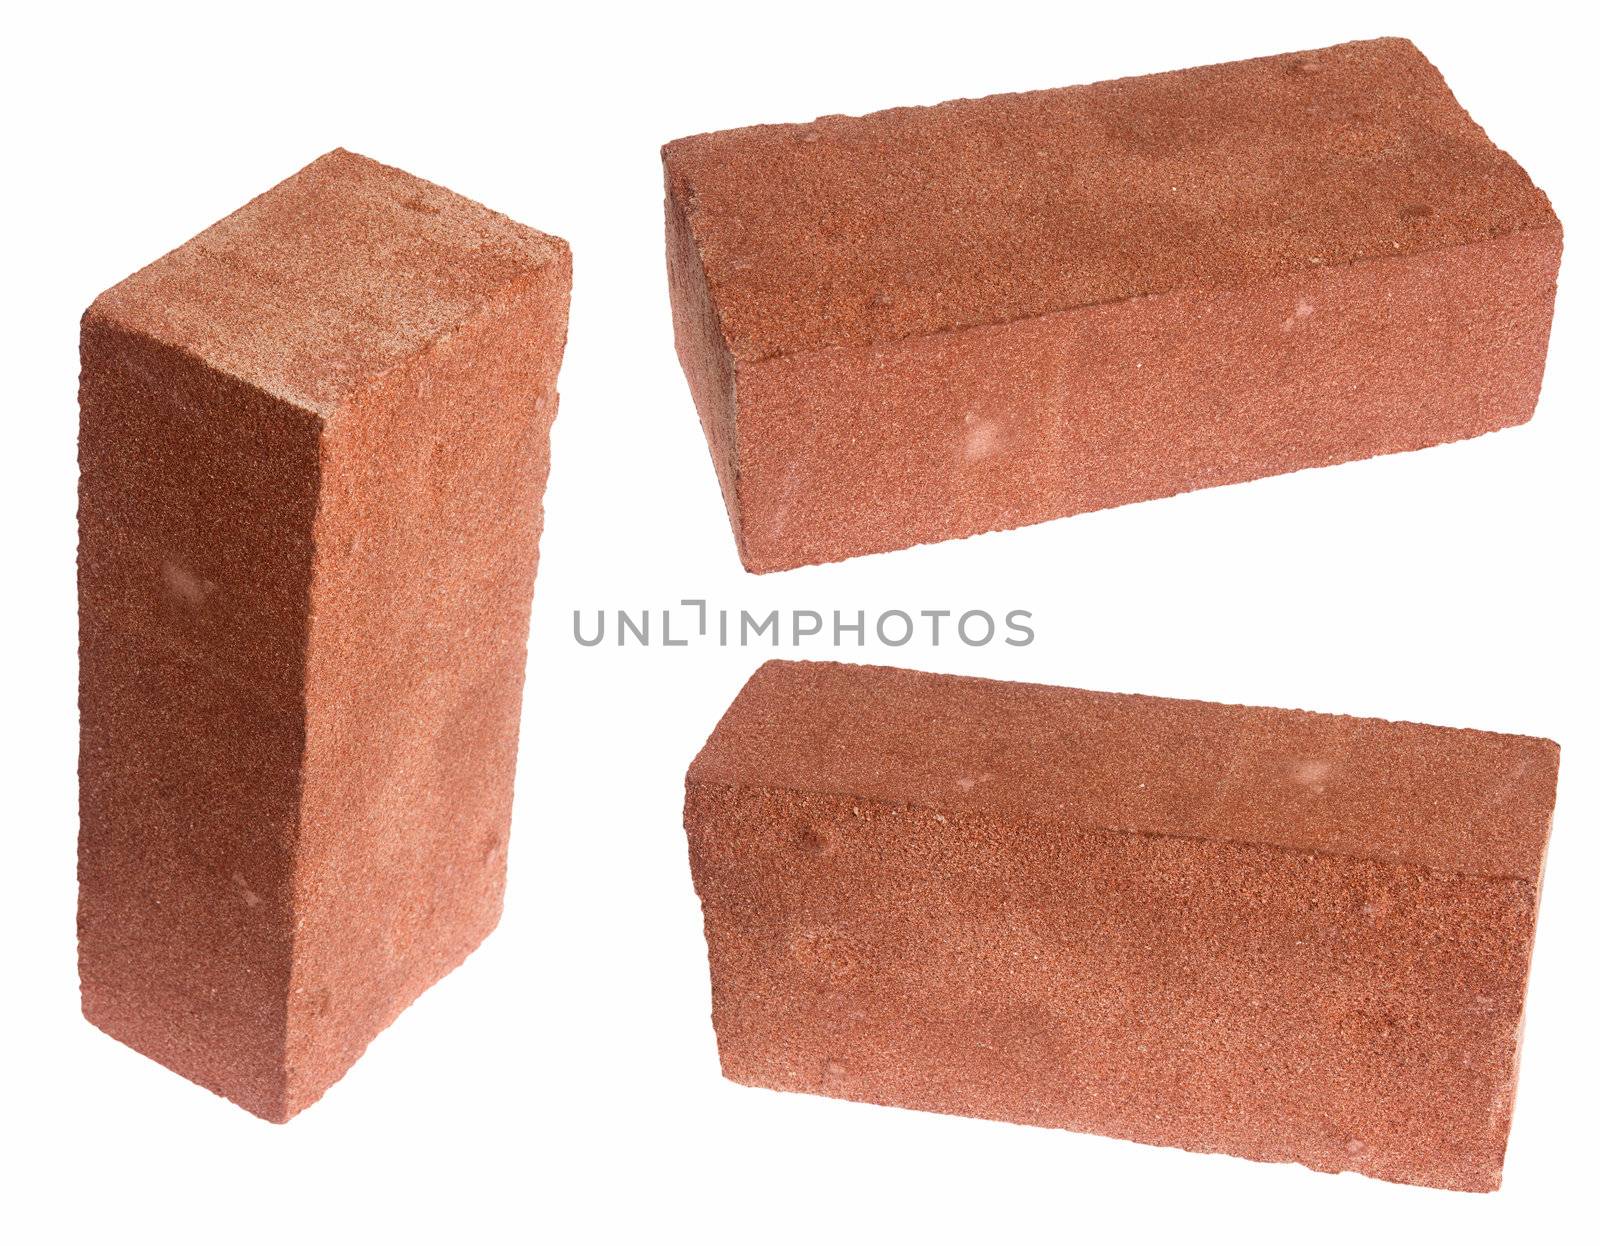 Bricks by tonlammerts